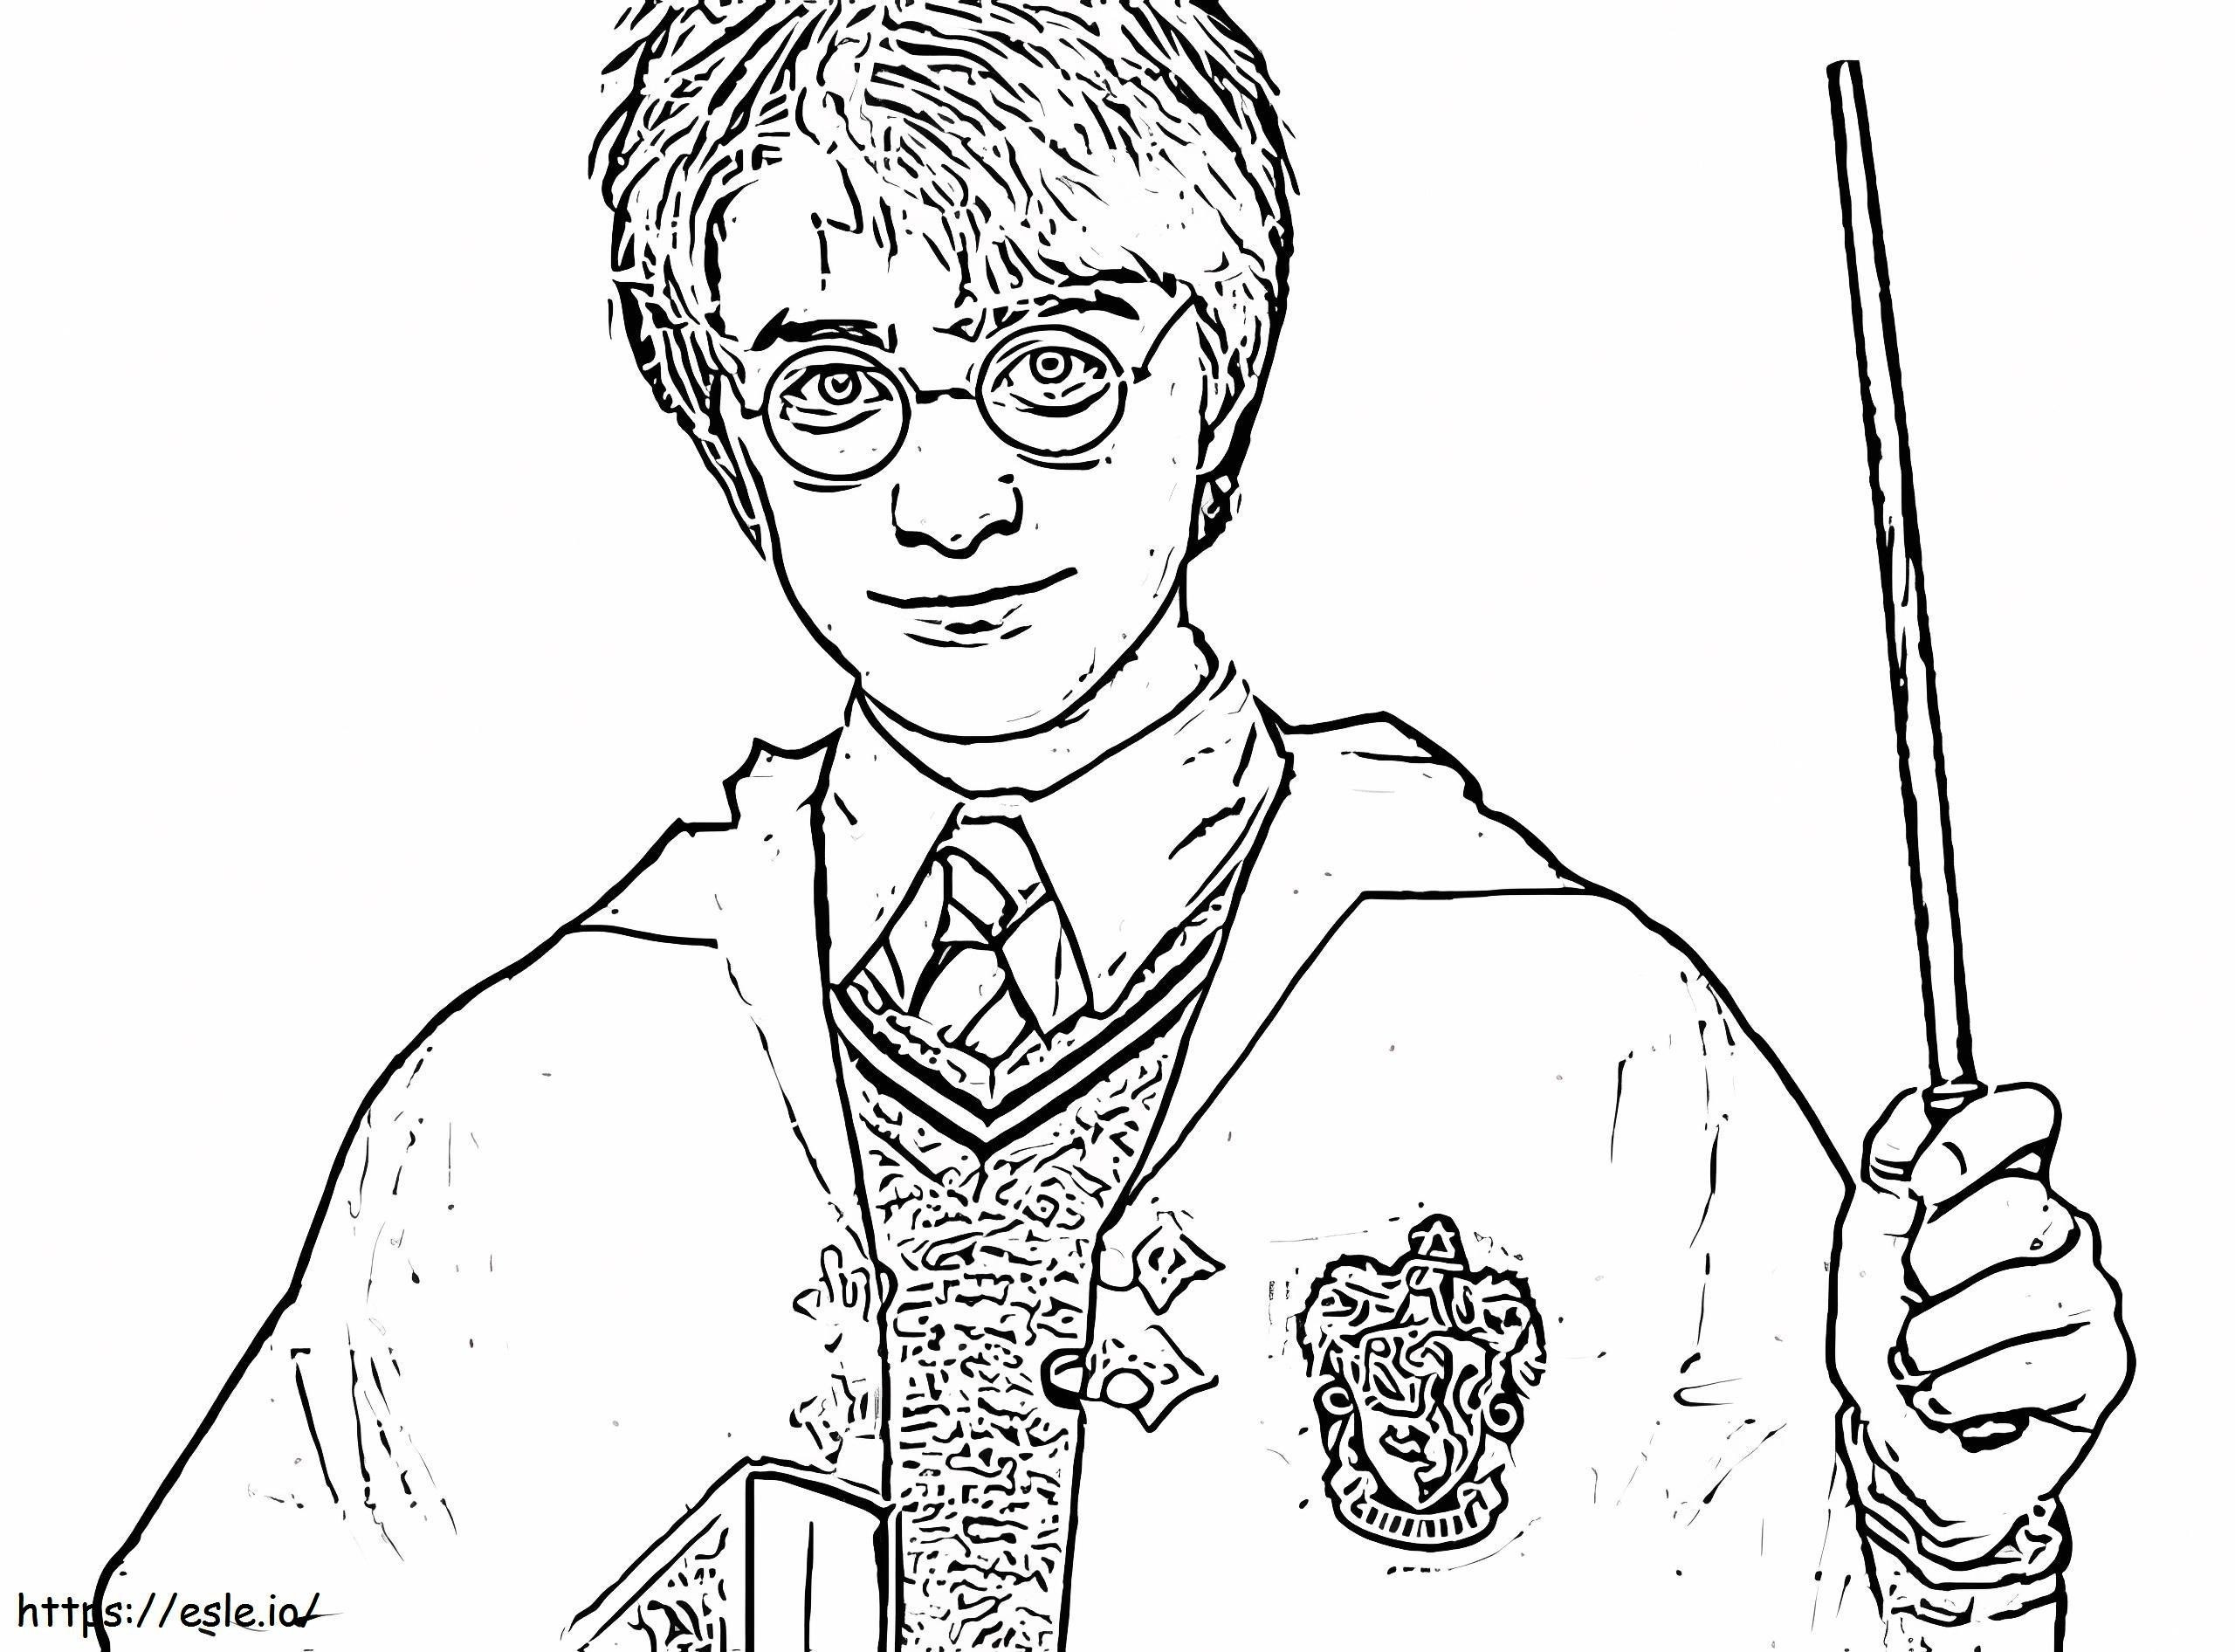 Cara de Harry Potter para colorear